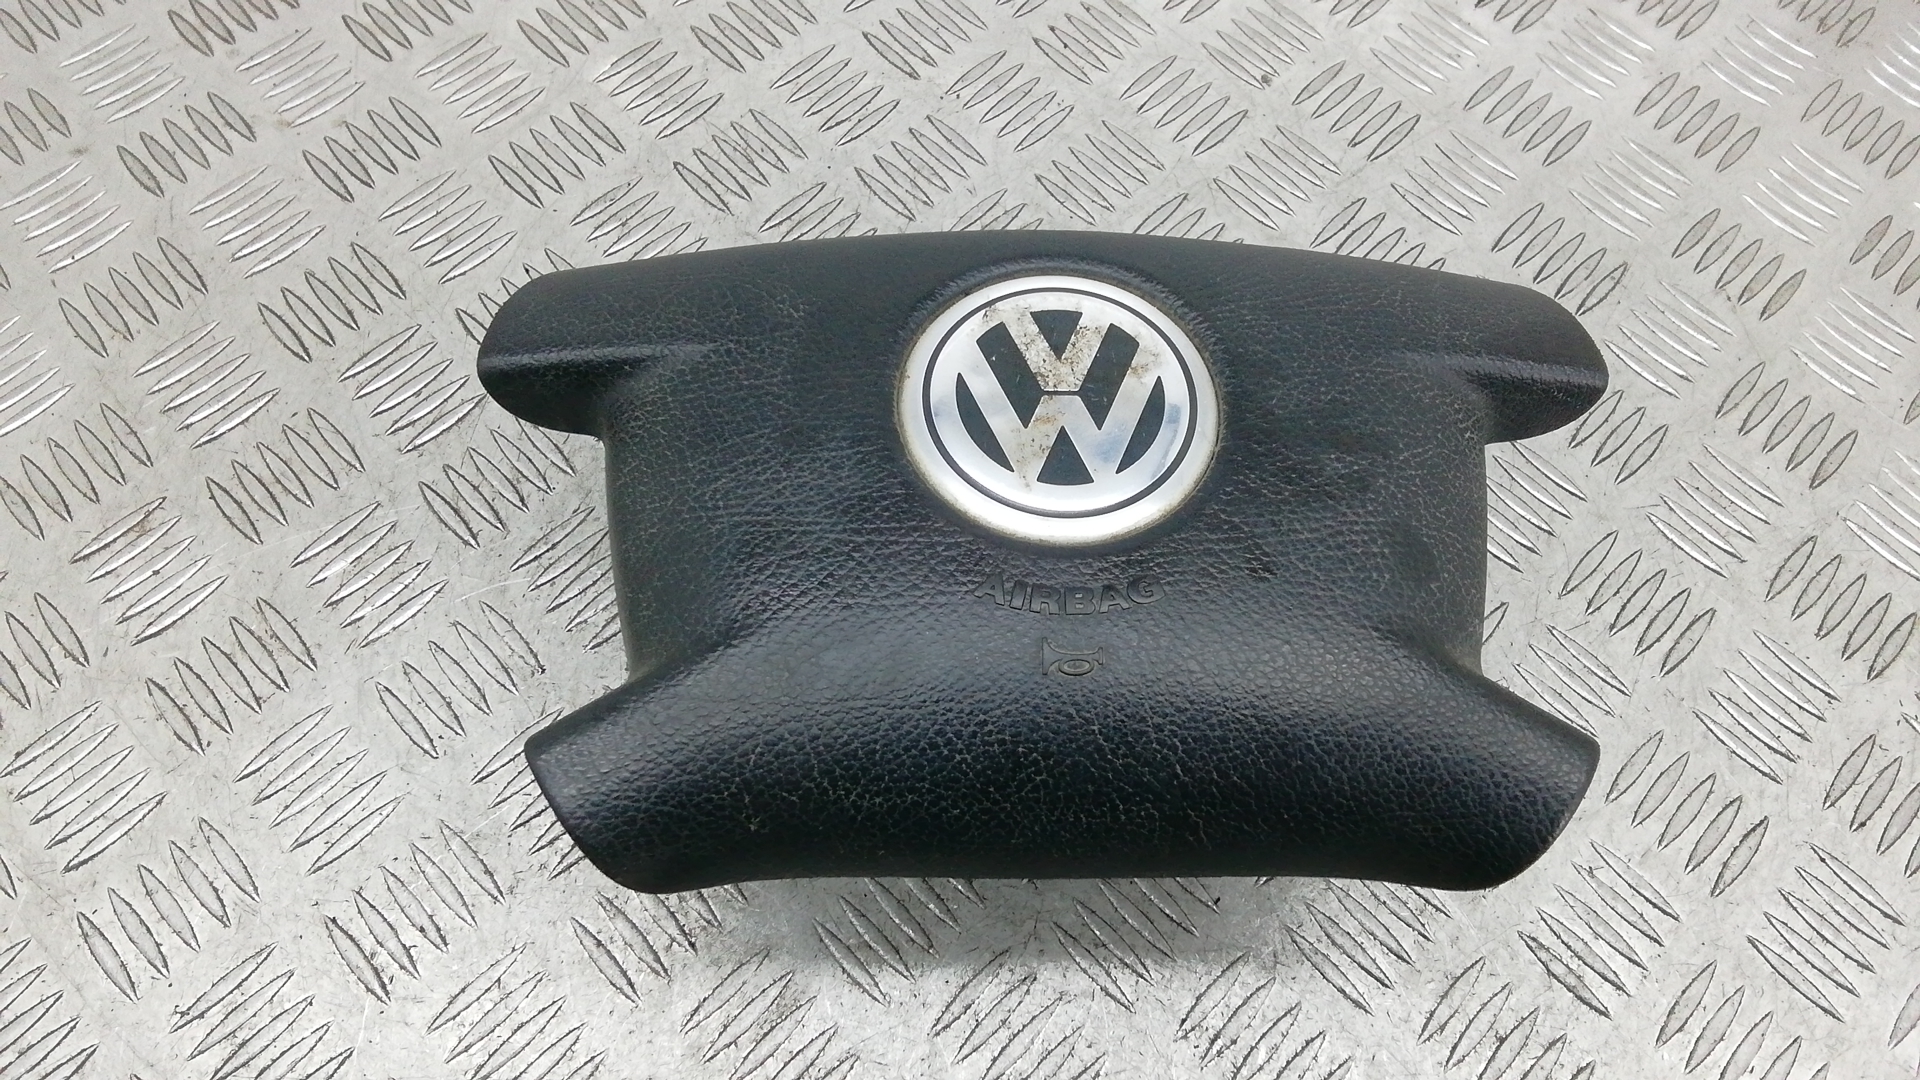 Подушка безопасности (Airbag) водителя - Volkswagen Transporter T5 (2003-2014)